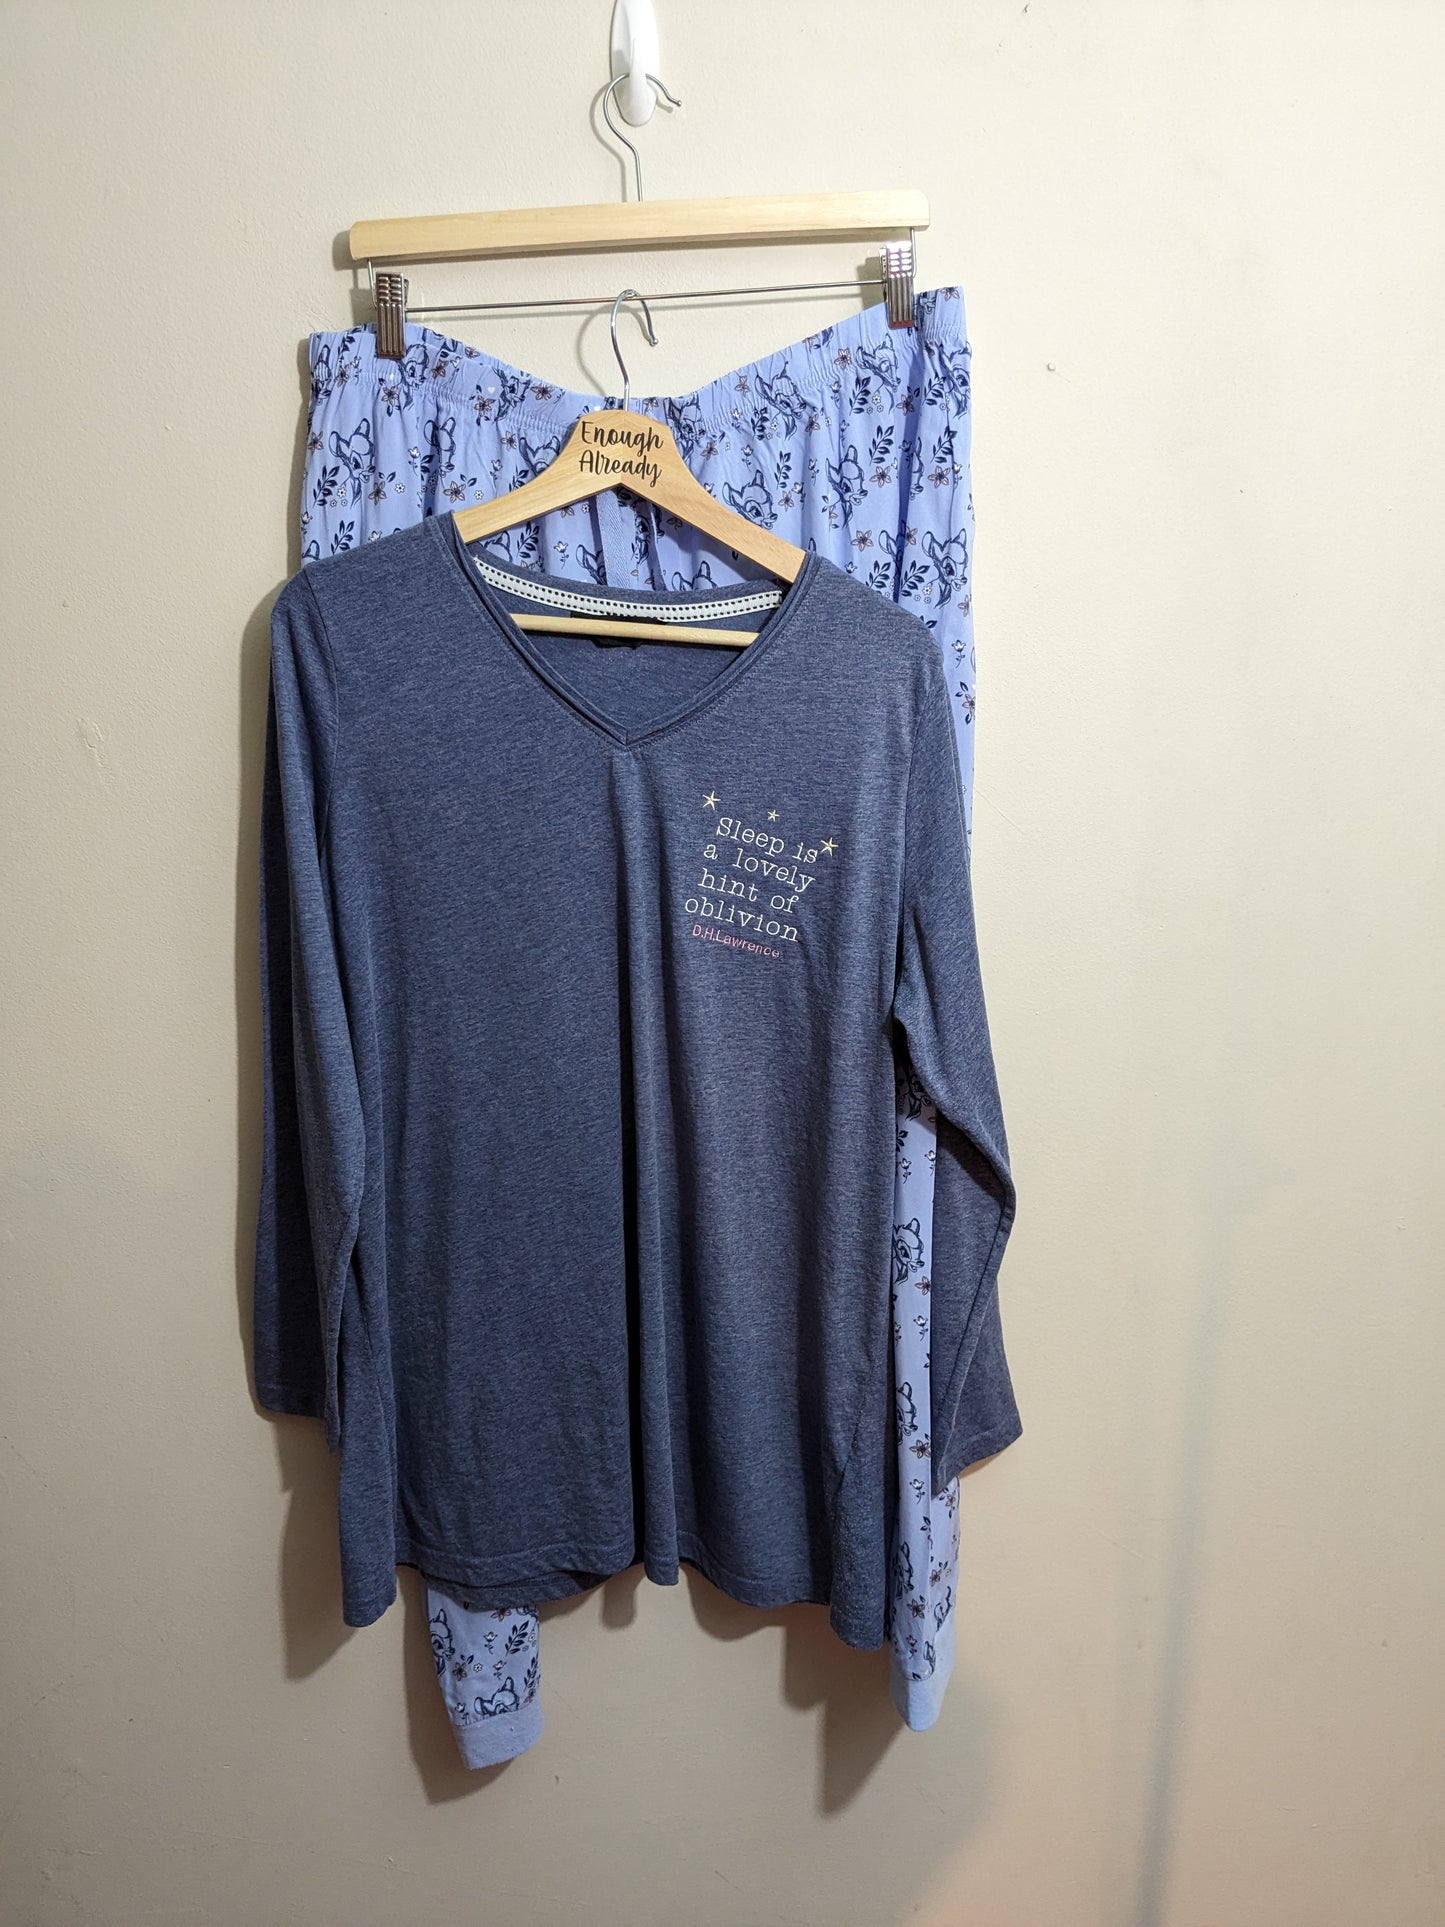 Size 20 Reworked Pyjama Set - Blue Tonal - D. H. Lawrence Bookish Design -